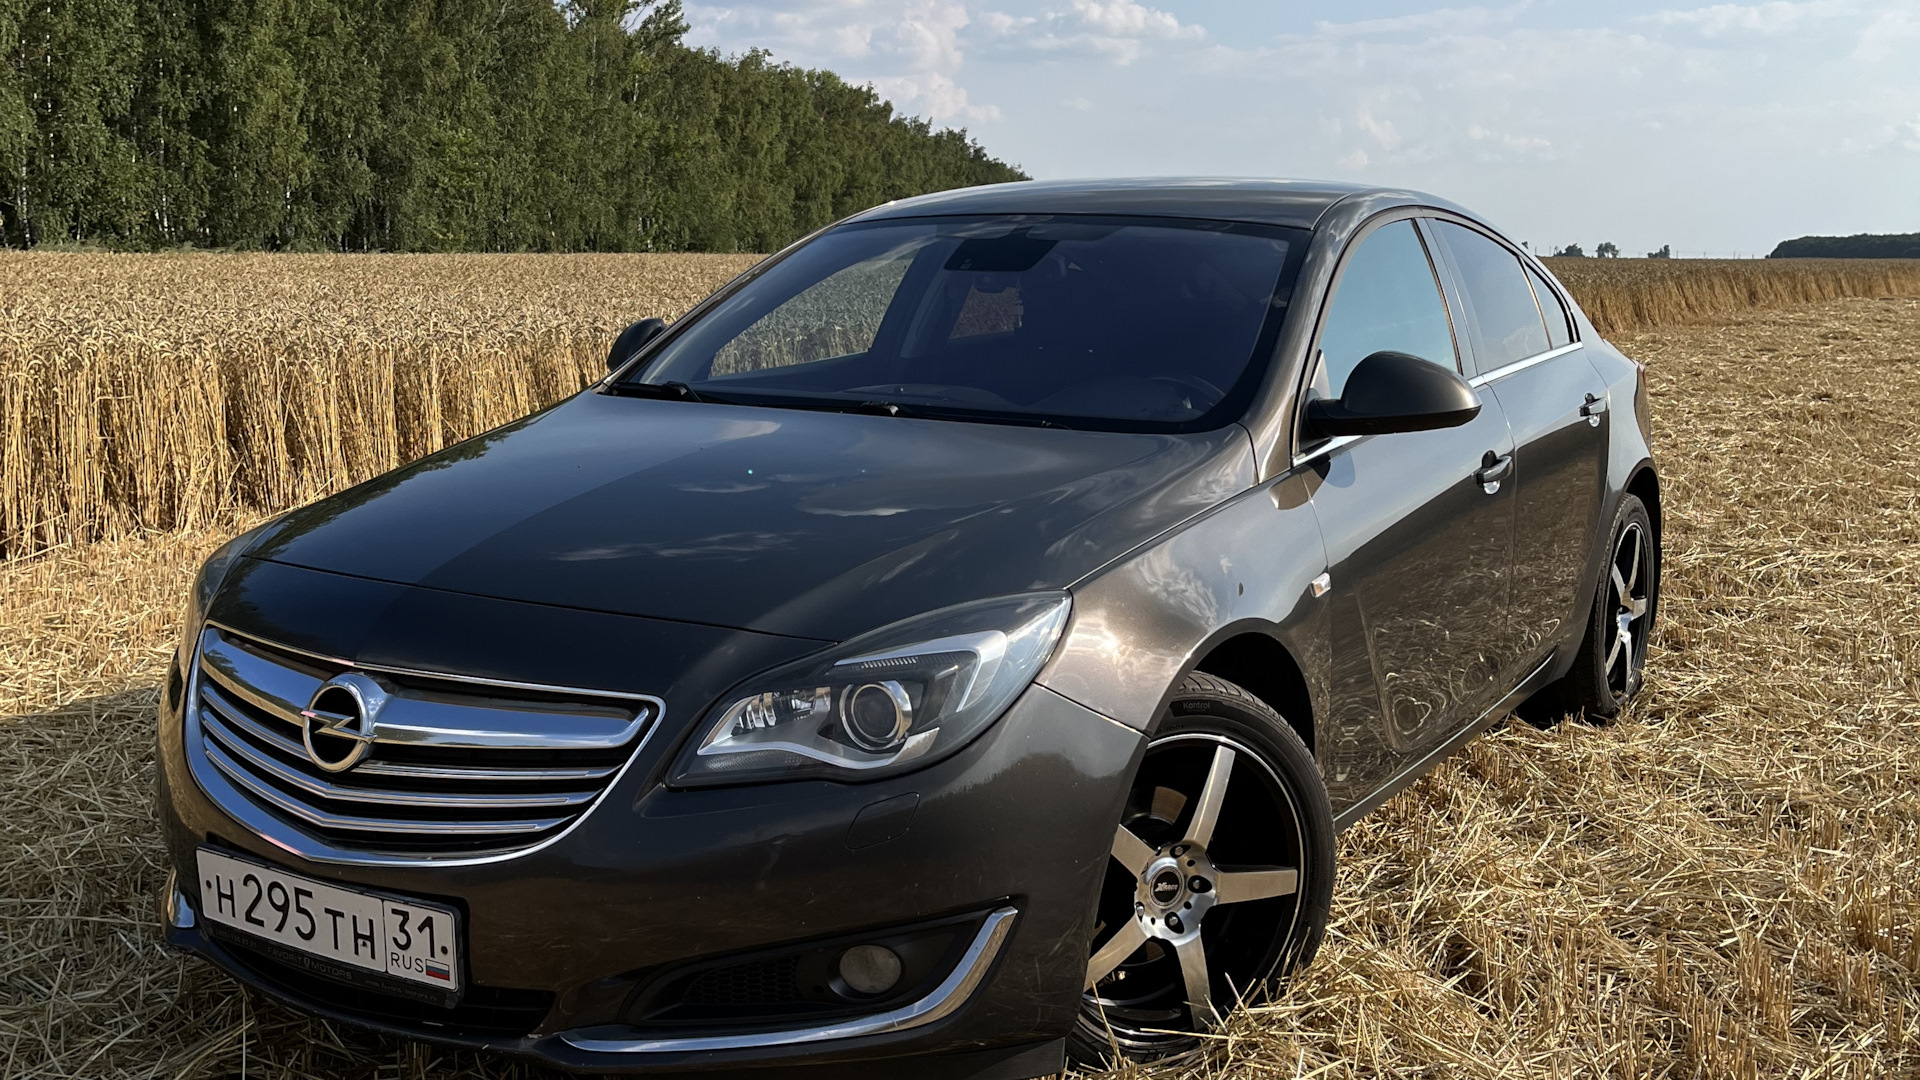 Opel insignia 1.8. Opel Insignia. Опель Инсигния 1. Опель Инсигния Москва драйв 2. Опель Инсигния Омск.